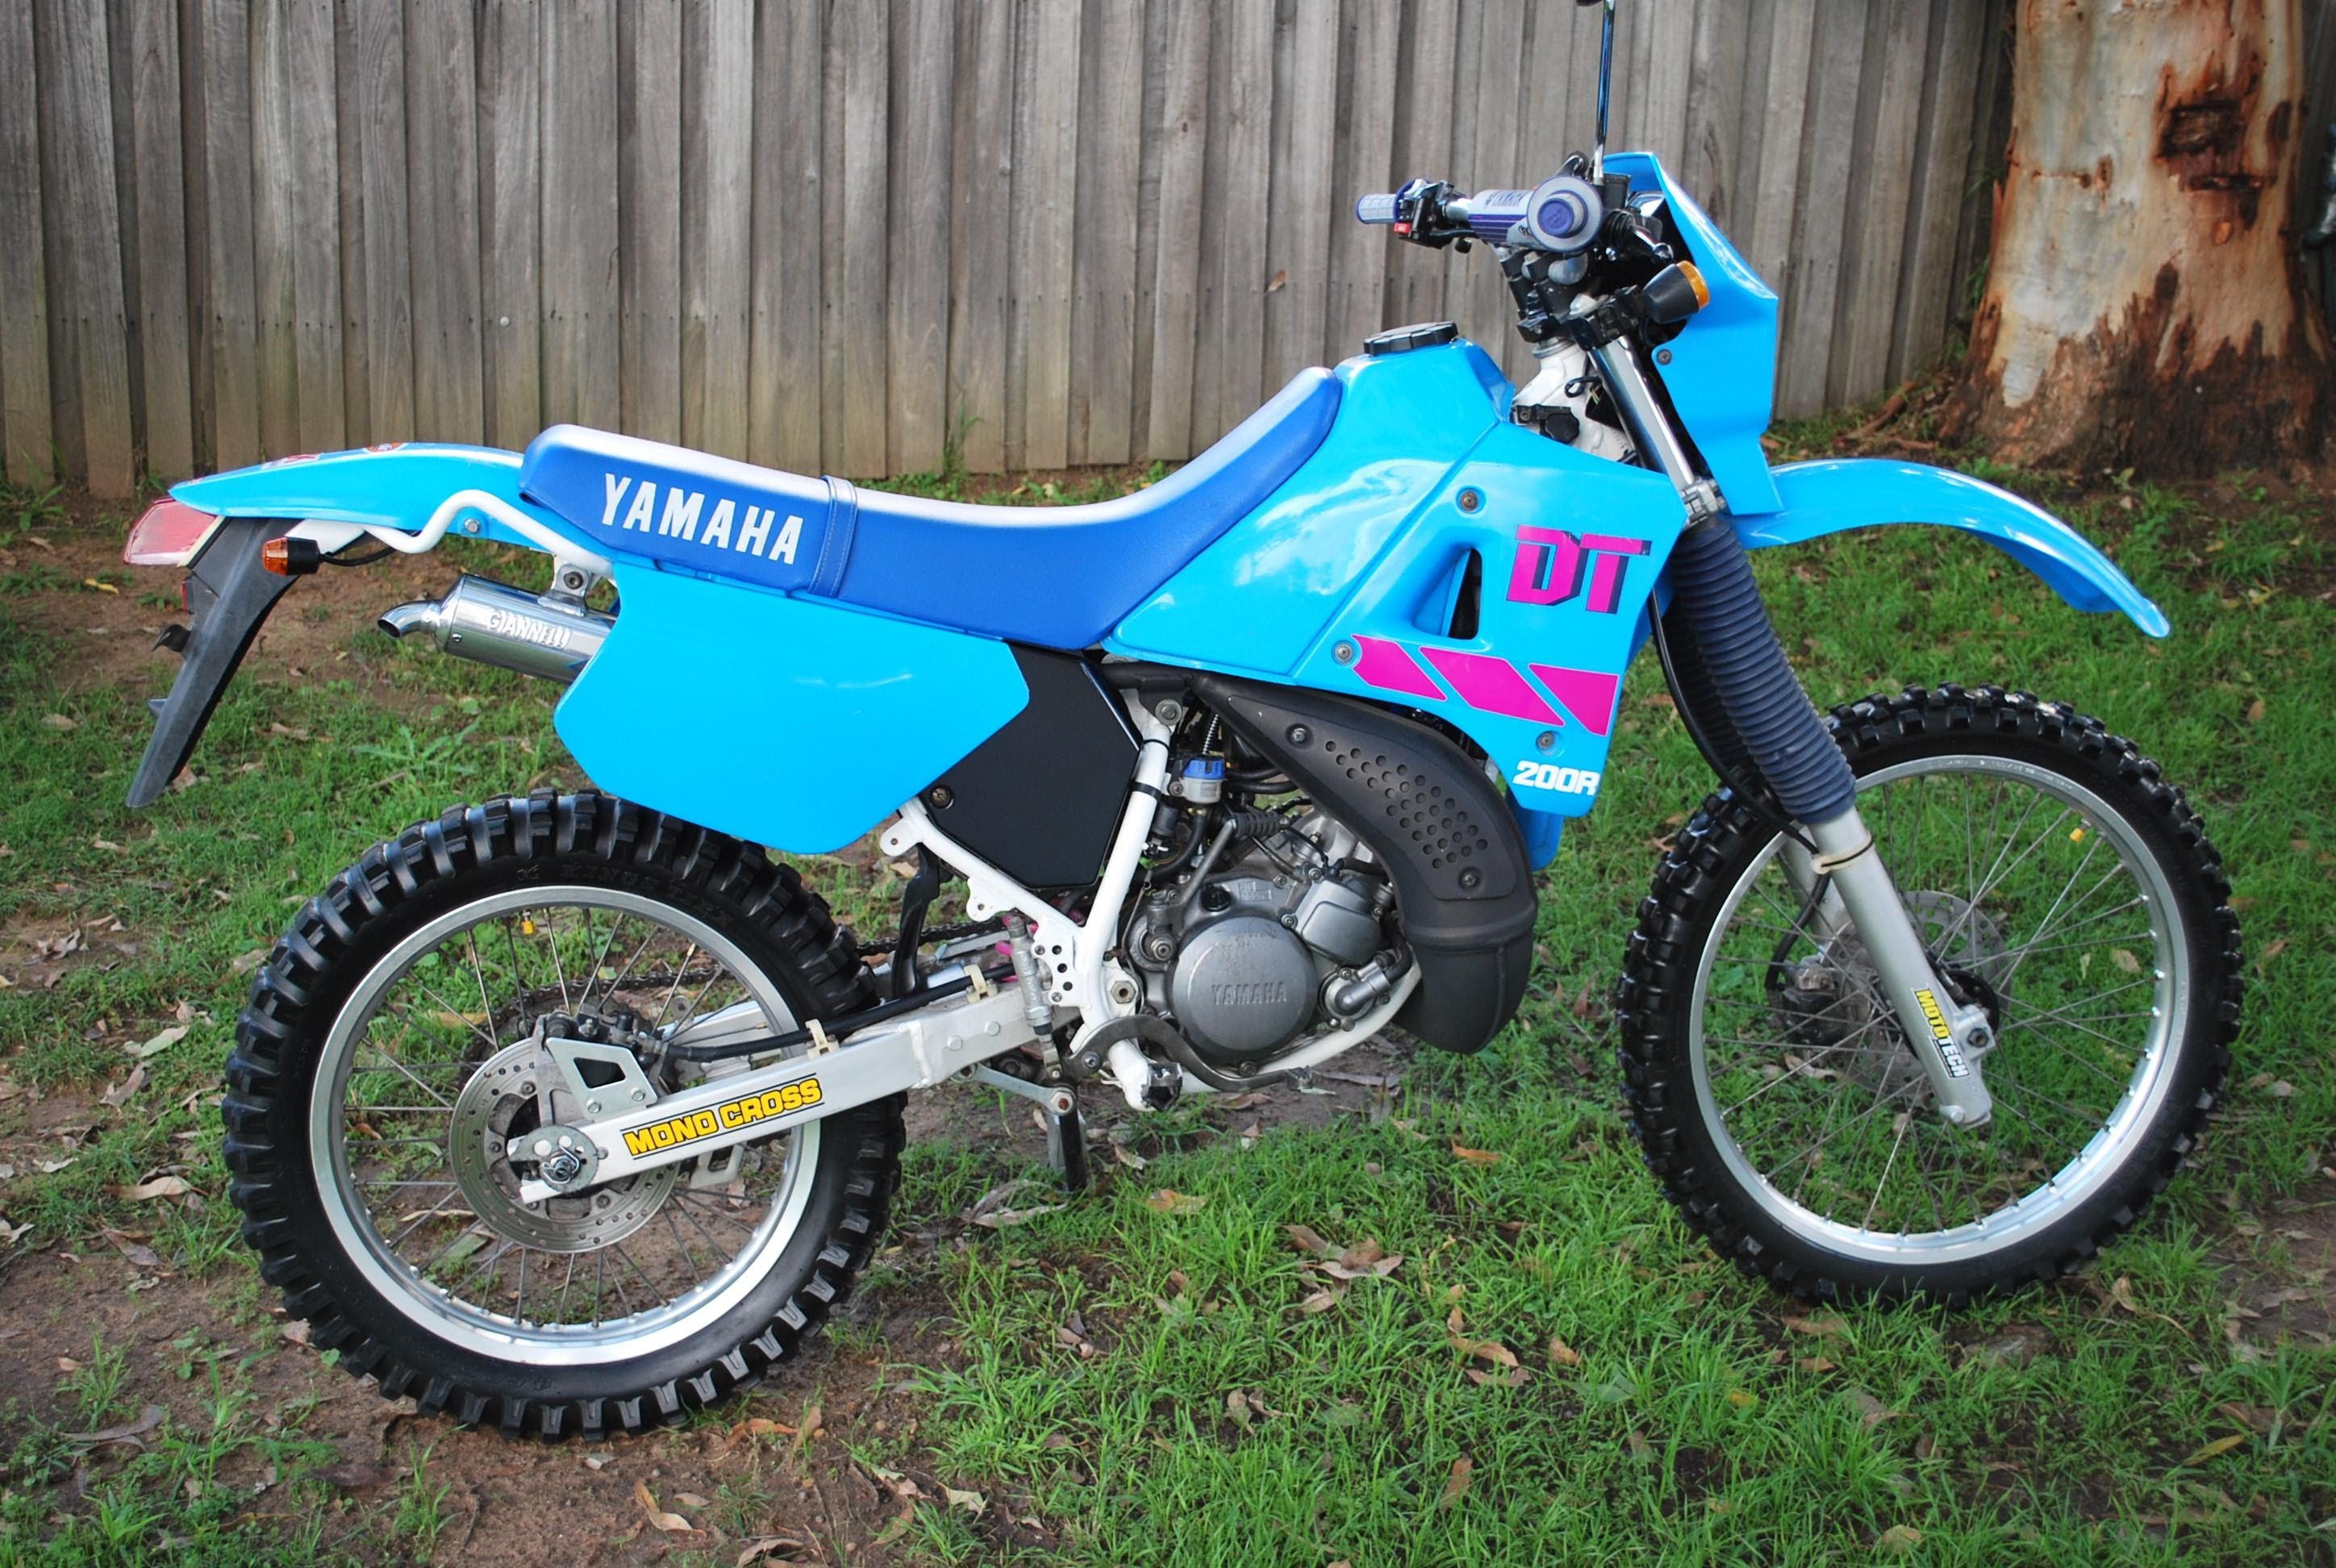 Yamaha DT200R Photos, Informations, Articles - Bikes 